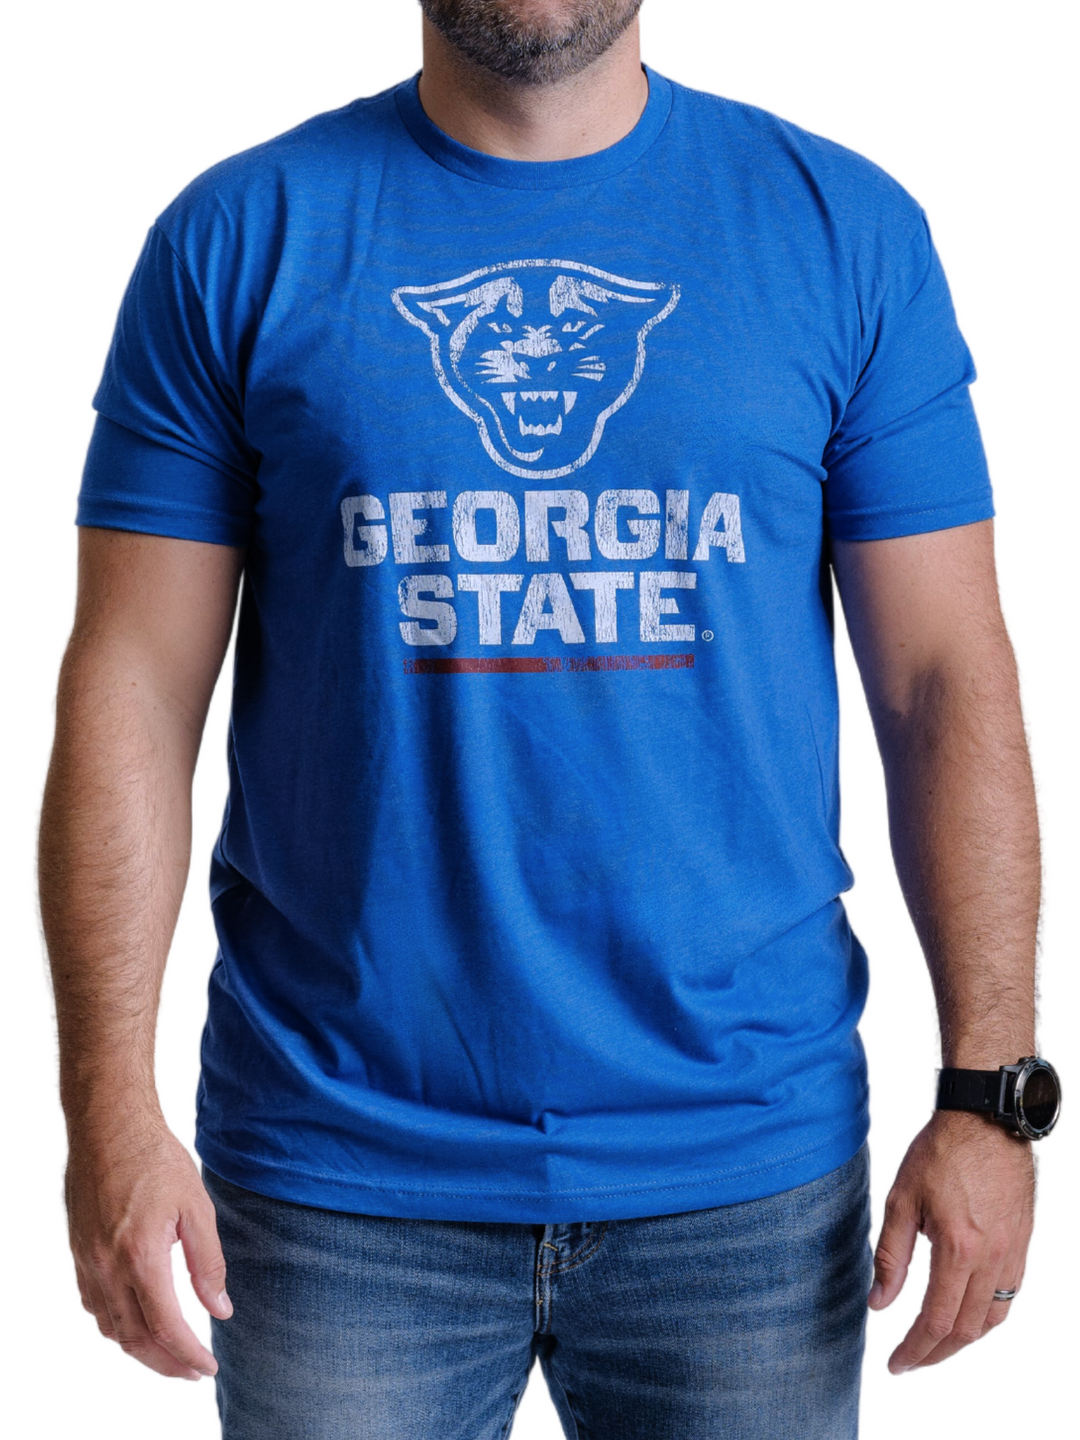 Georgia State University Panthers Stacked Combo Logo Unisex T-shirt (Royal Blue)Georgia State University Panthers Stacked Combo Logo Unisex T-shirt (Royal Blue)